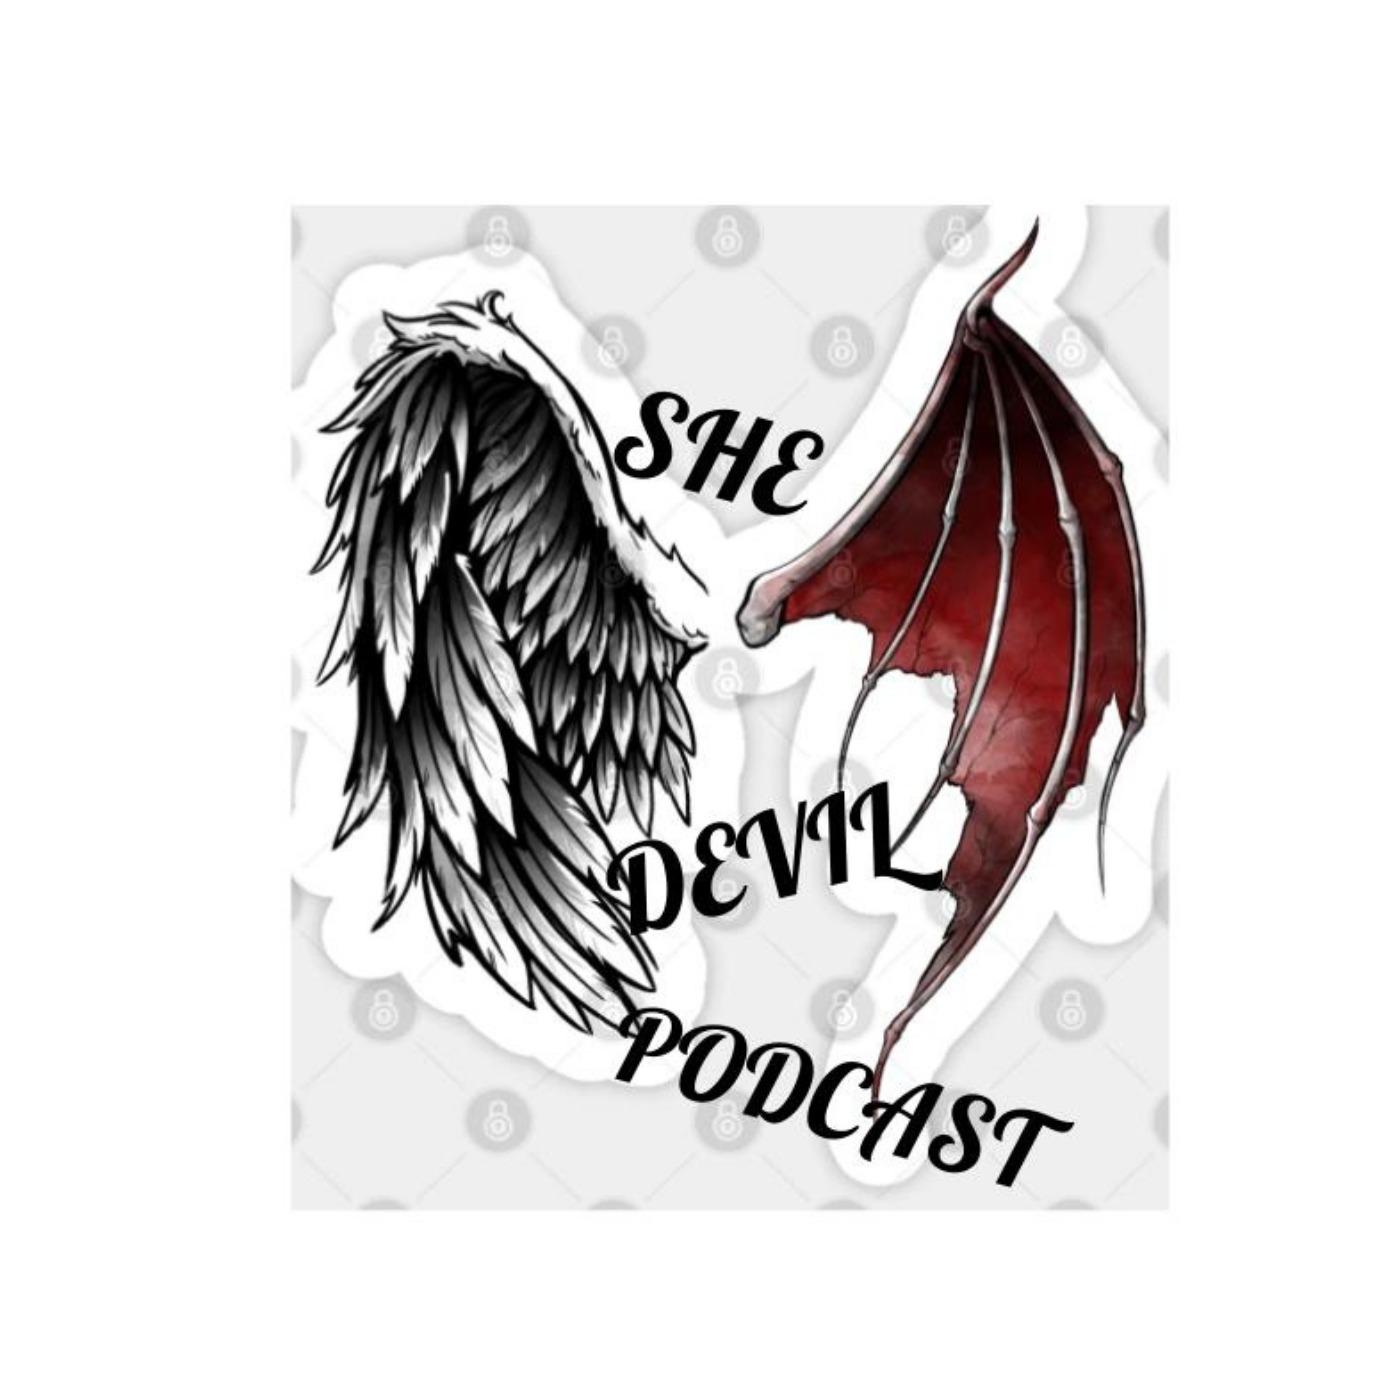 She Devil Podcast